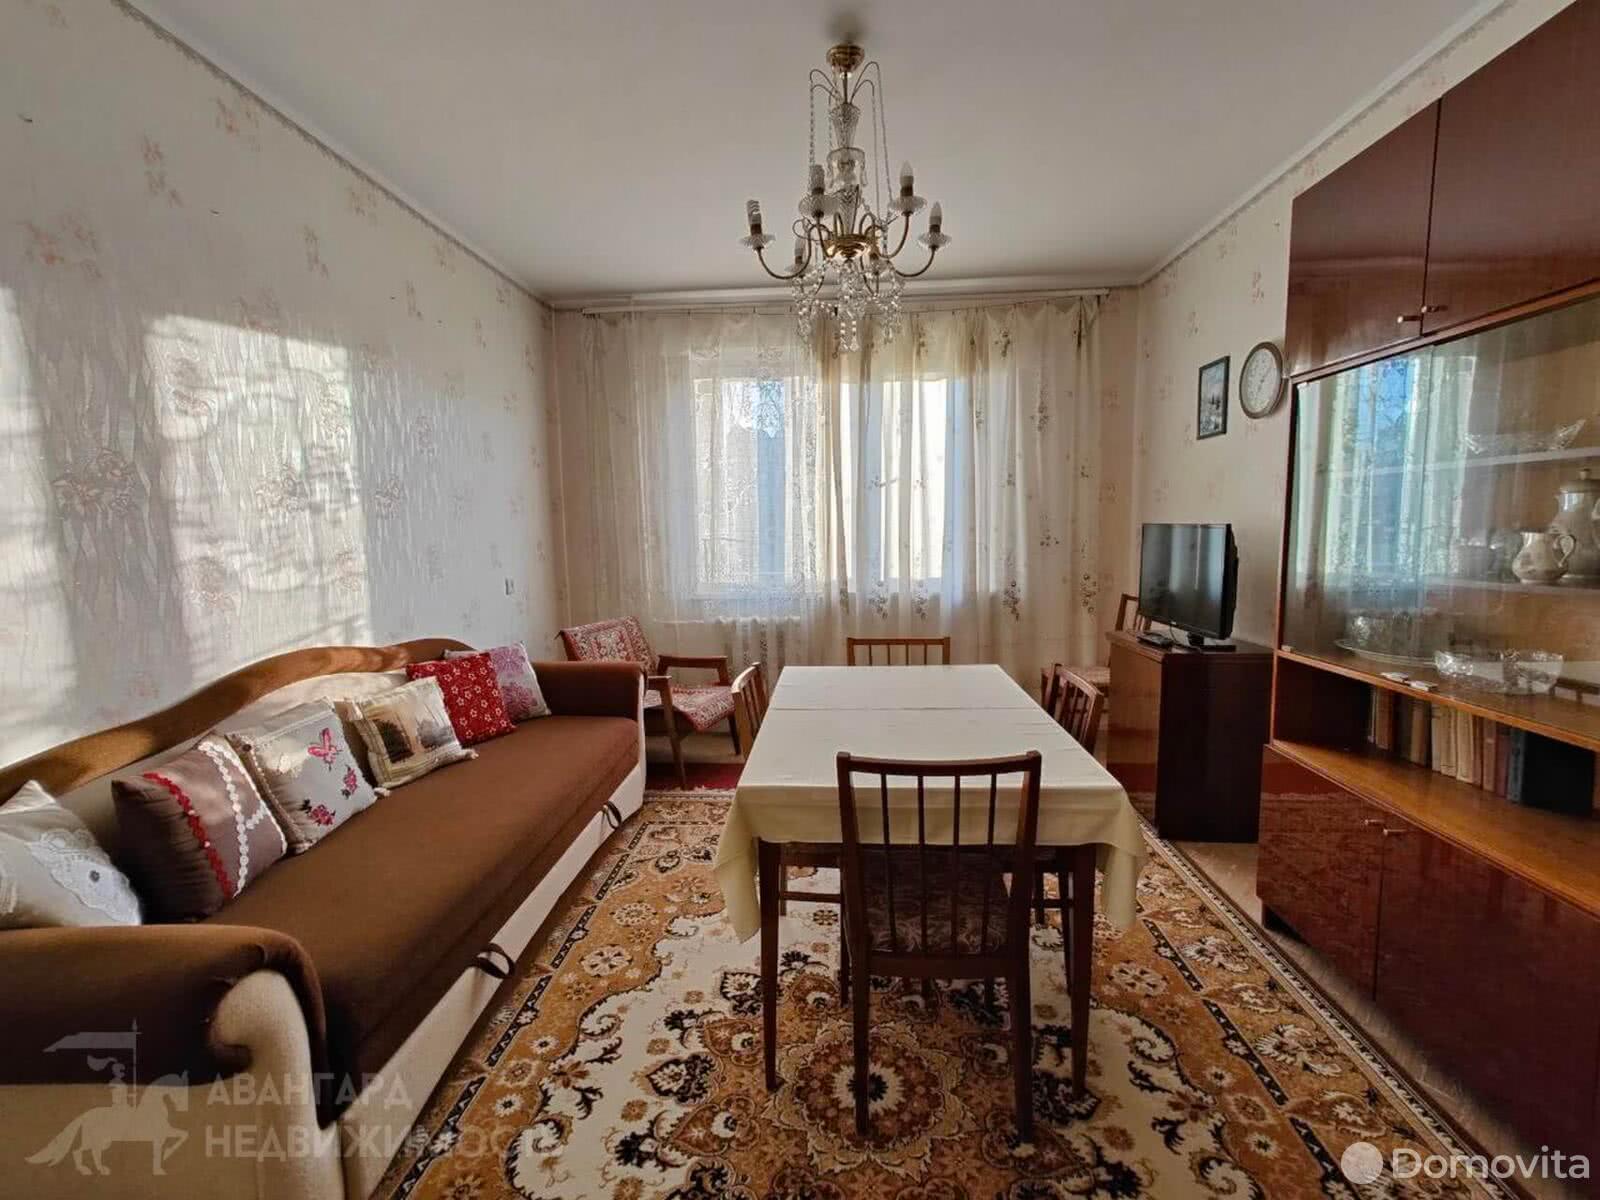 квартира, Минск, ул. Лобанка, д. 71, стоимость аренды 978 р./мес.